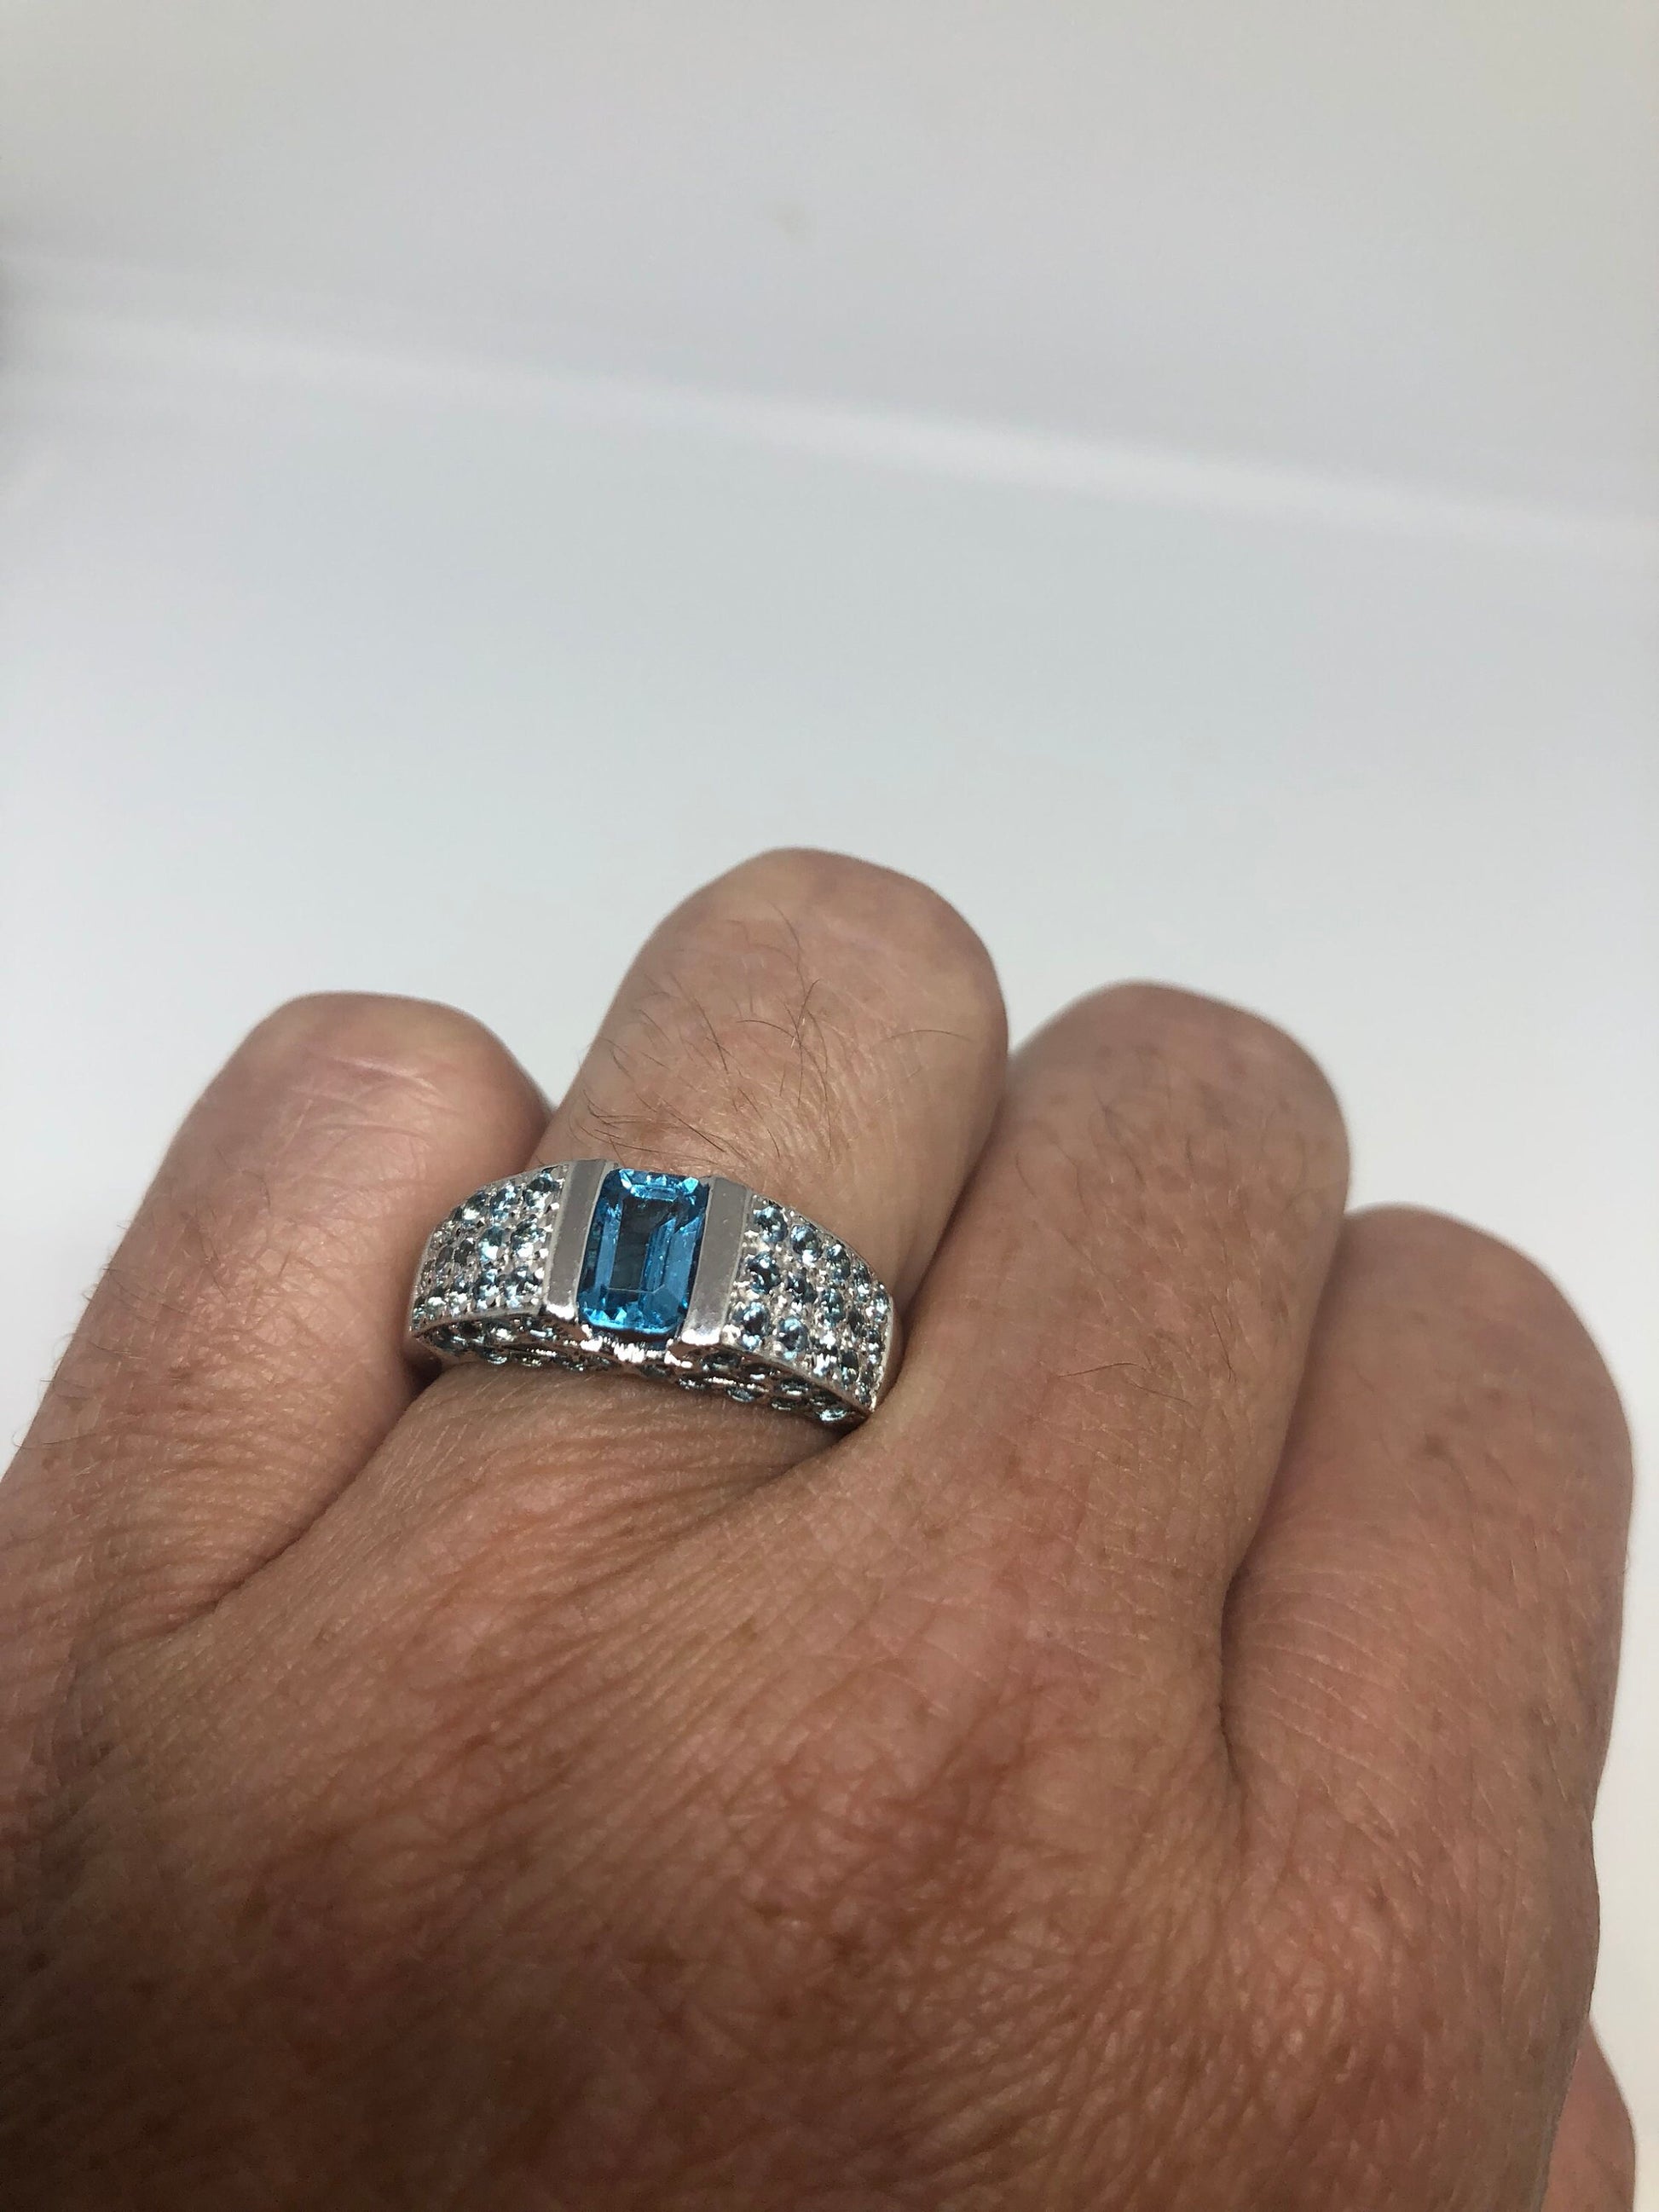 Vintage Genuine Blue Topaz 925 Sterling Silver Rhodium Ring